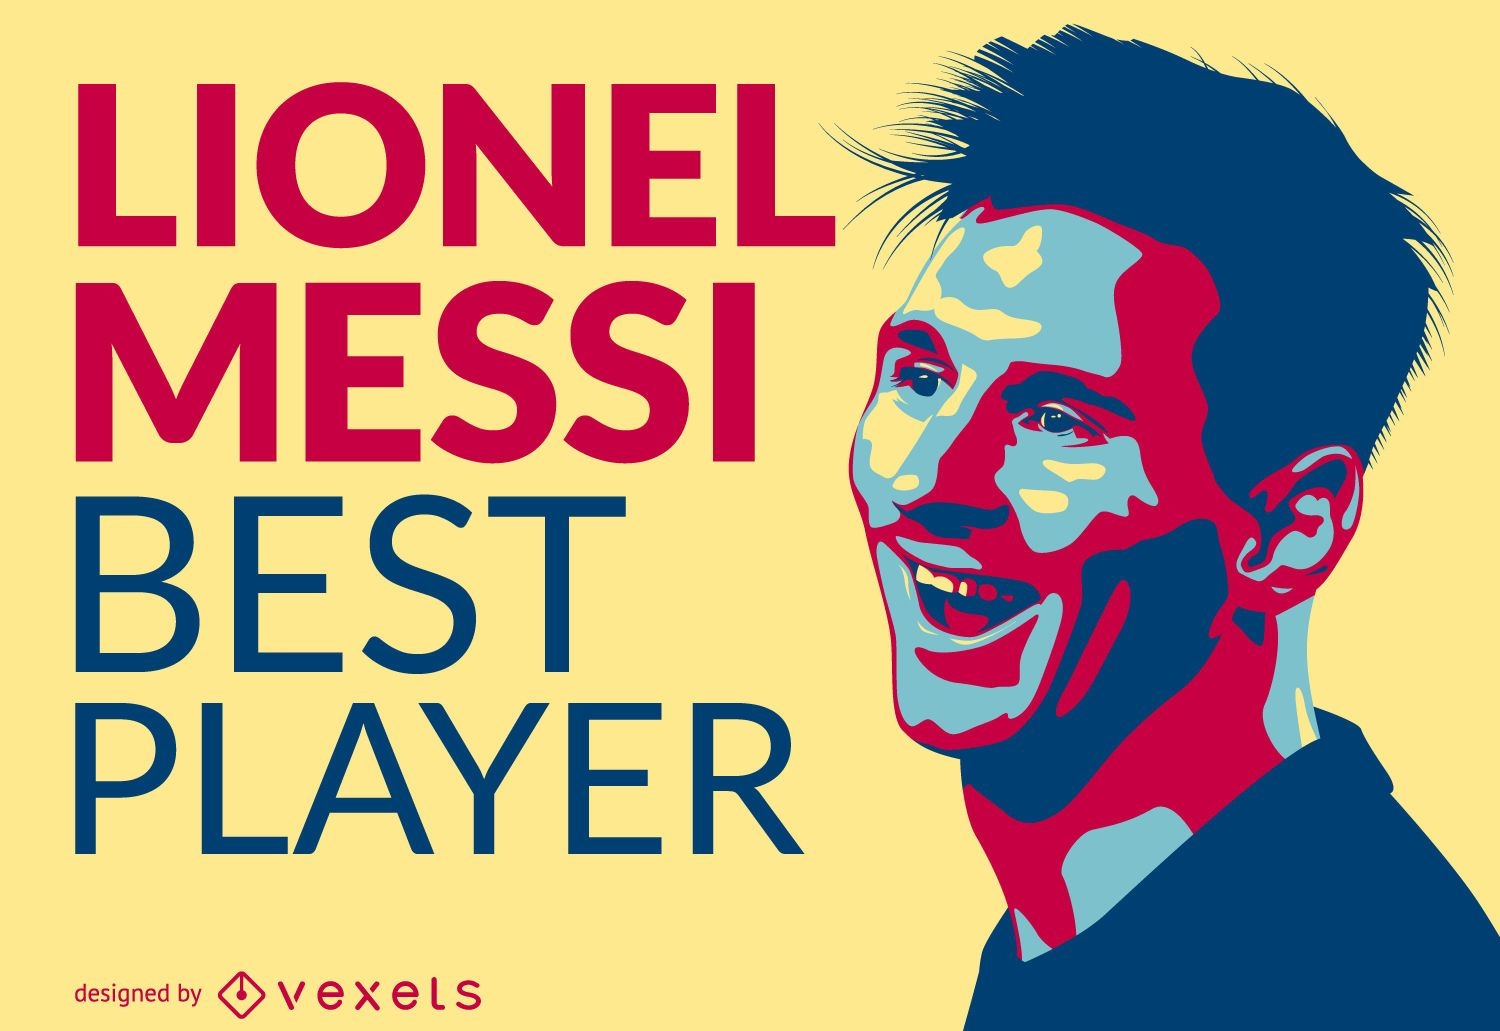 Lionel Messi beste Spielerillustration